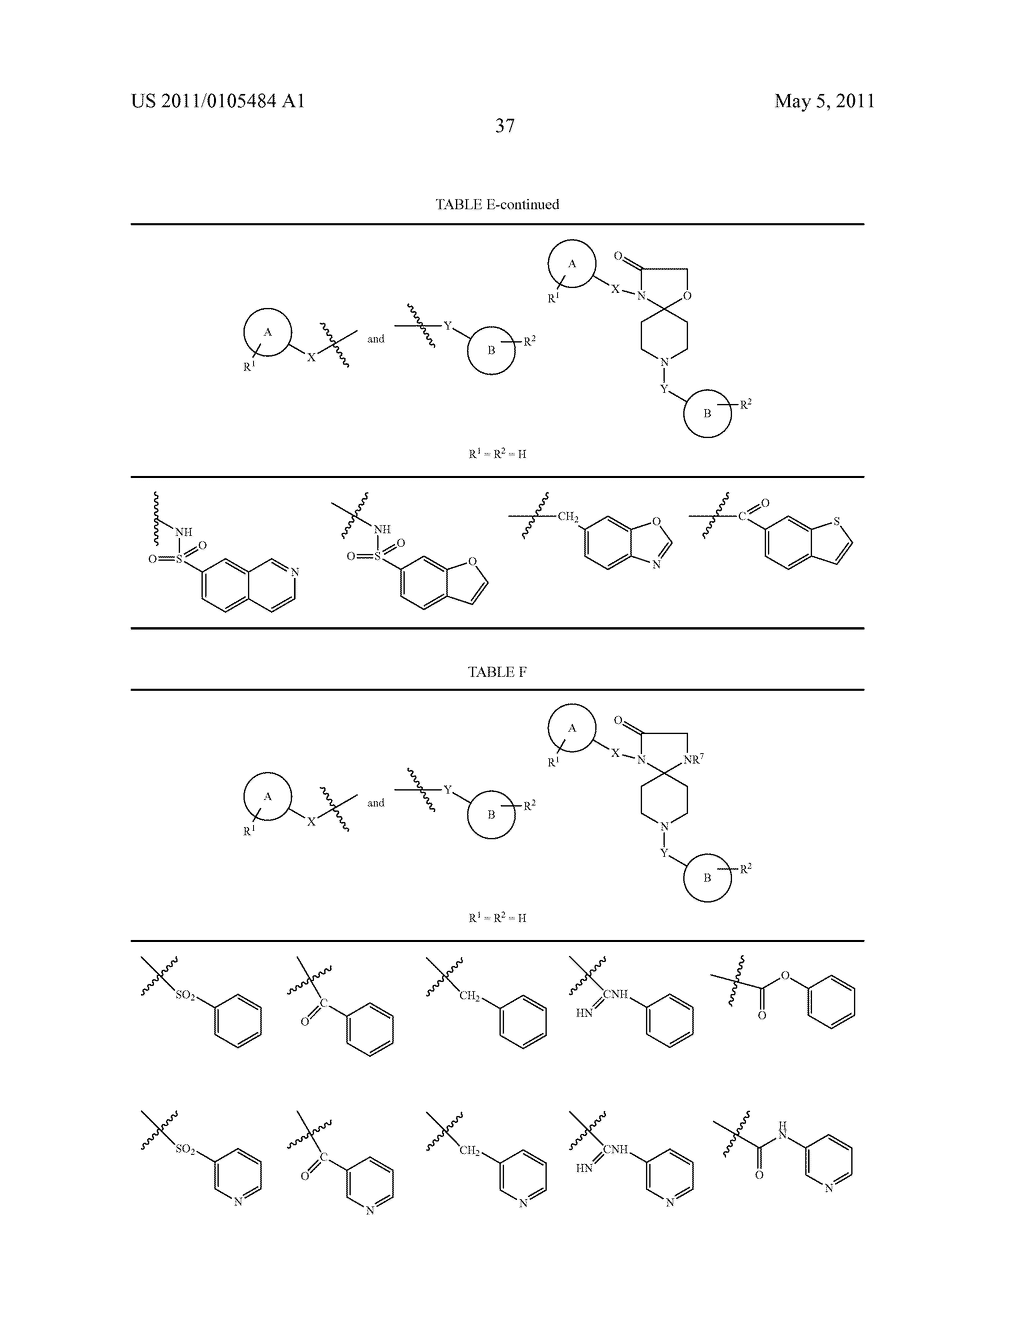 FILAMIN A-BINDING ANTI-INFLAMMATORY ANALGESIC - diagram, schematic, and image 38